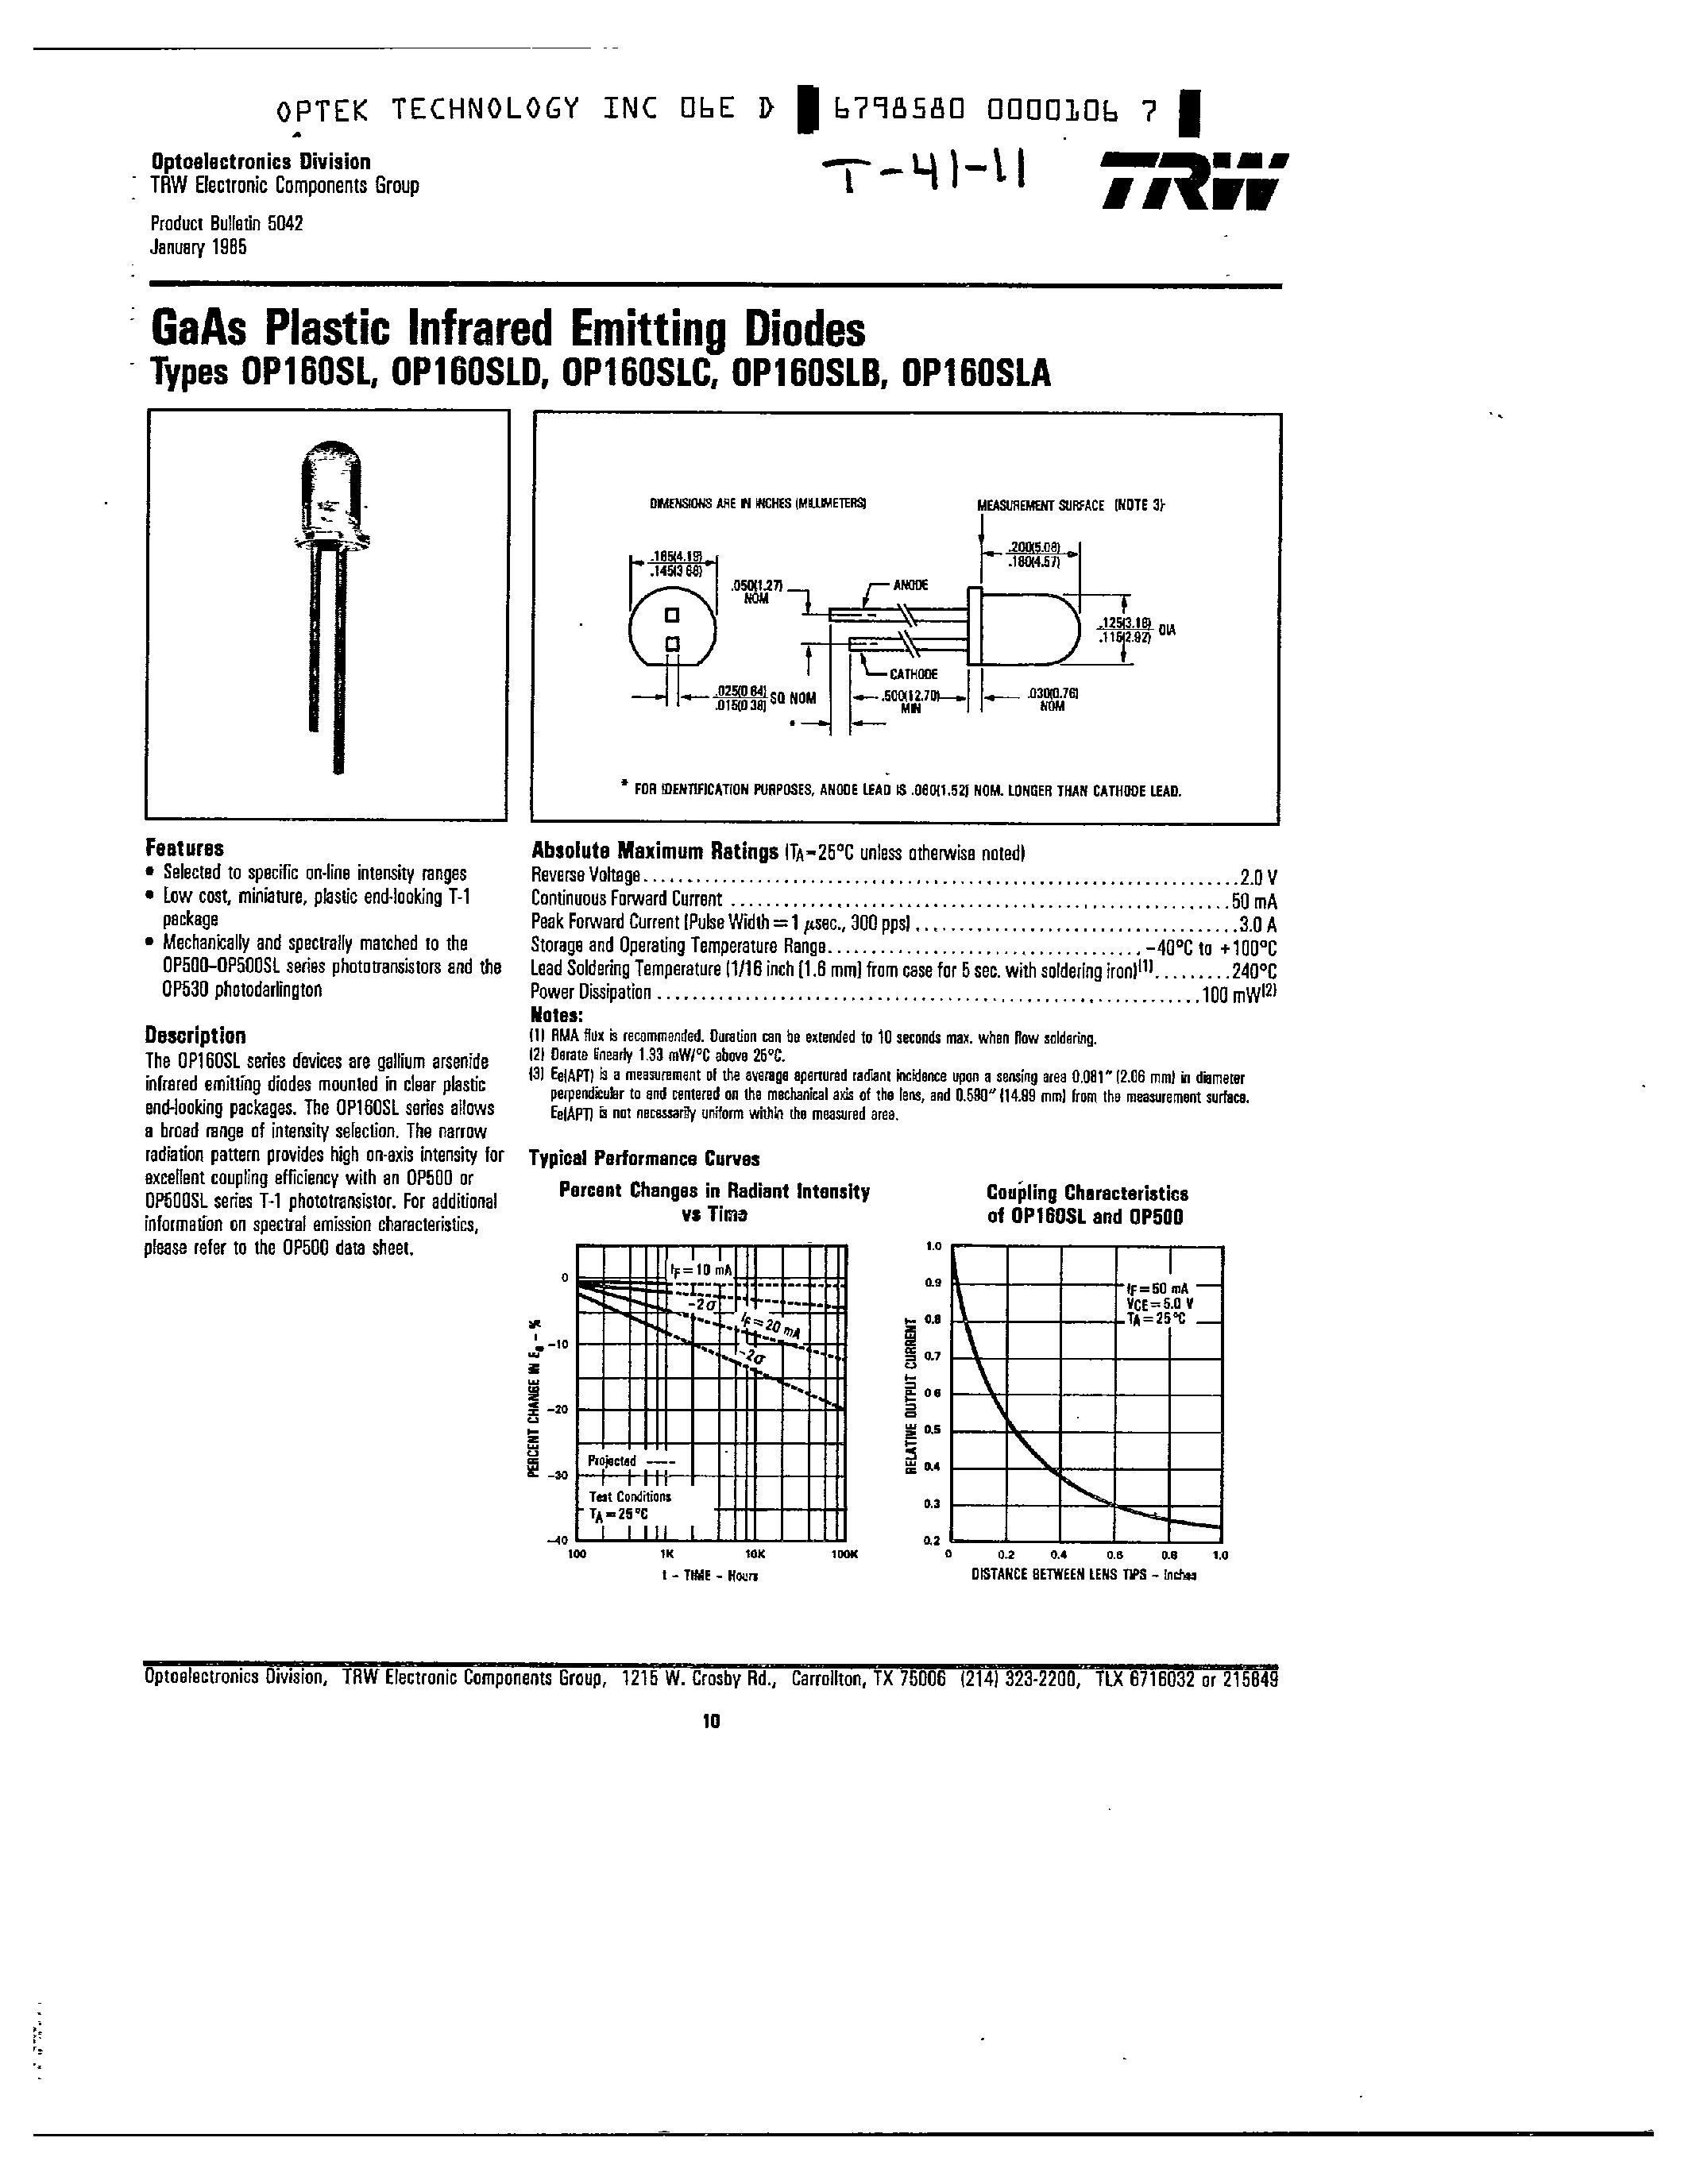 Datasheet OP160SLC - GAAS PLASTIC INFRARED EMITTING DIODES page 1